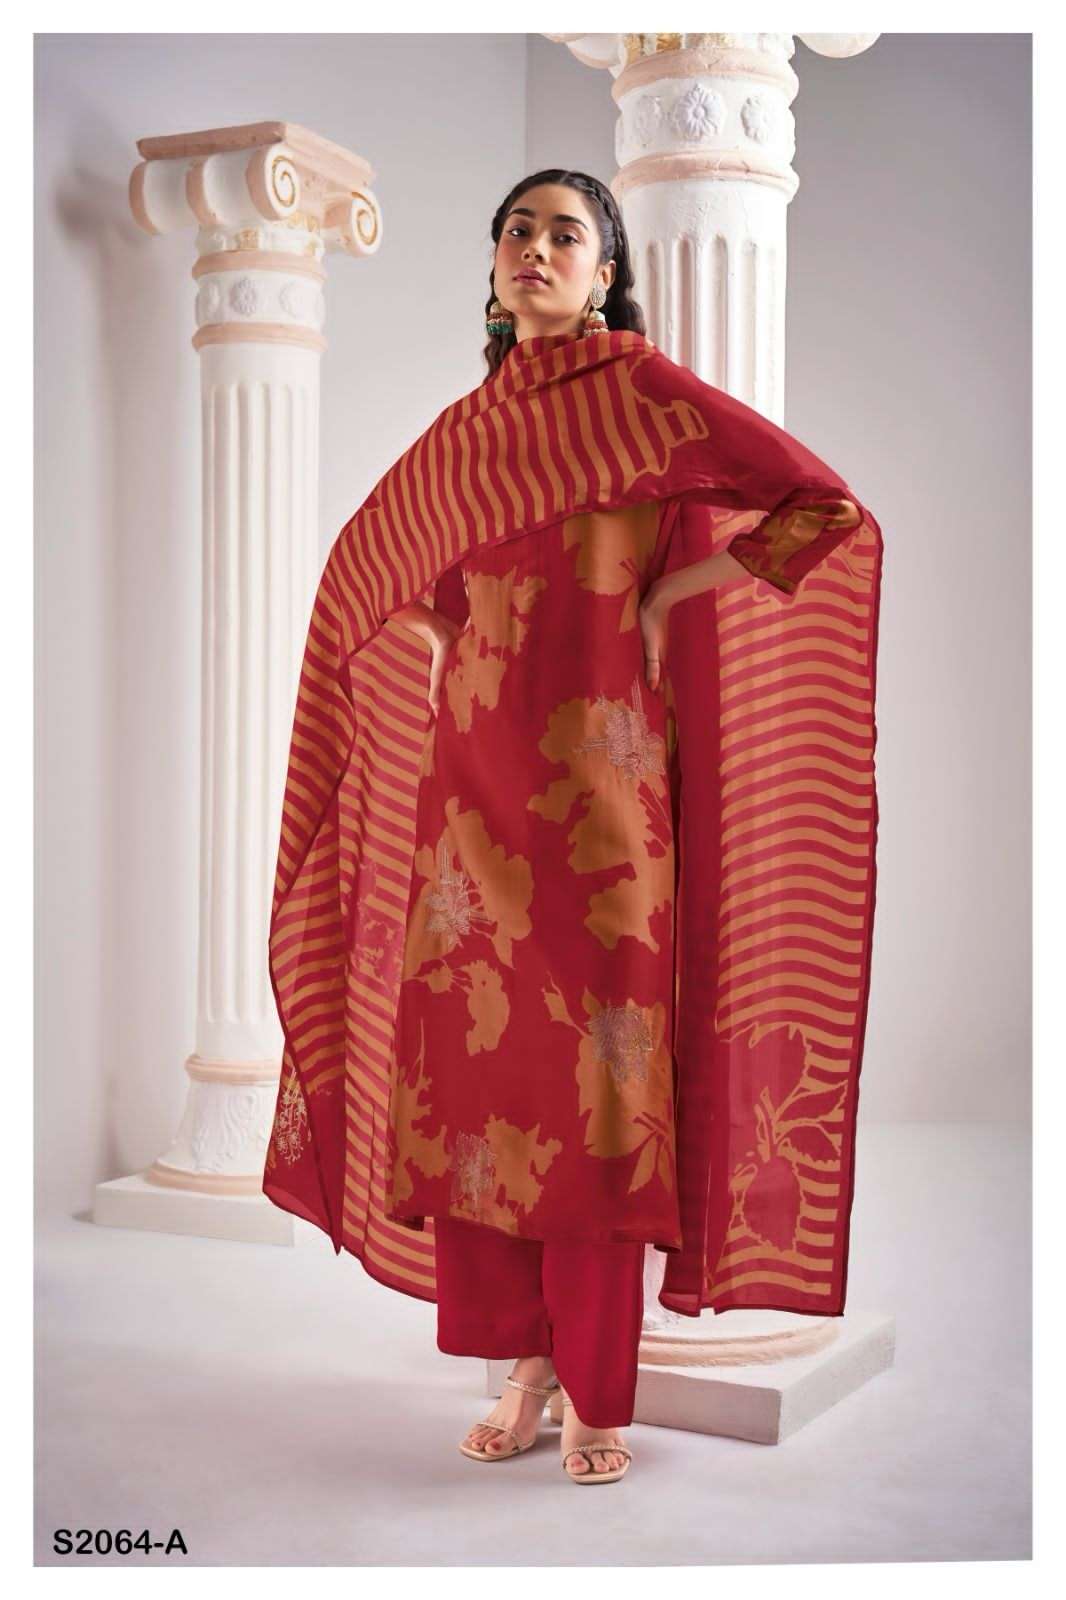 ganga villie 2064 colour series designer  pakistani salwar kameez wholesaler surat gujarat